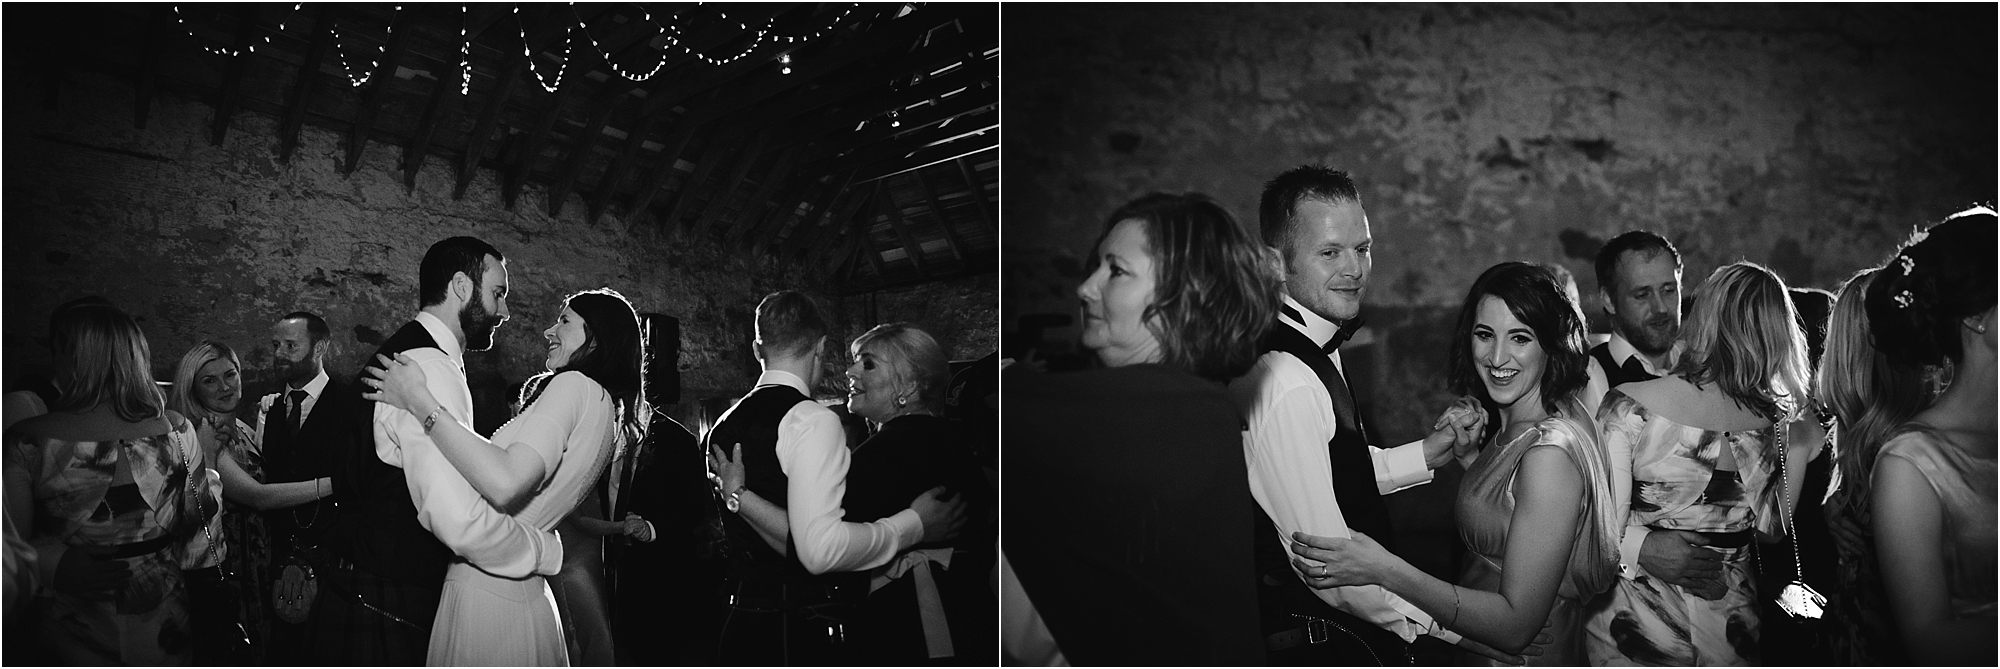 Scott+Joanna-Kinkell-Byre-wedding-fife-photography__0099.jpg